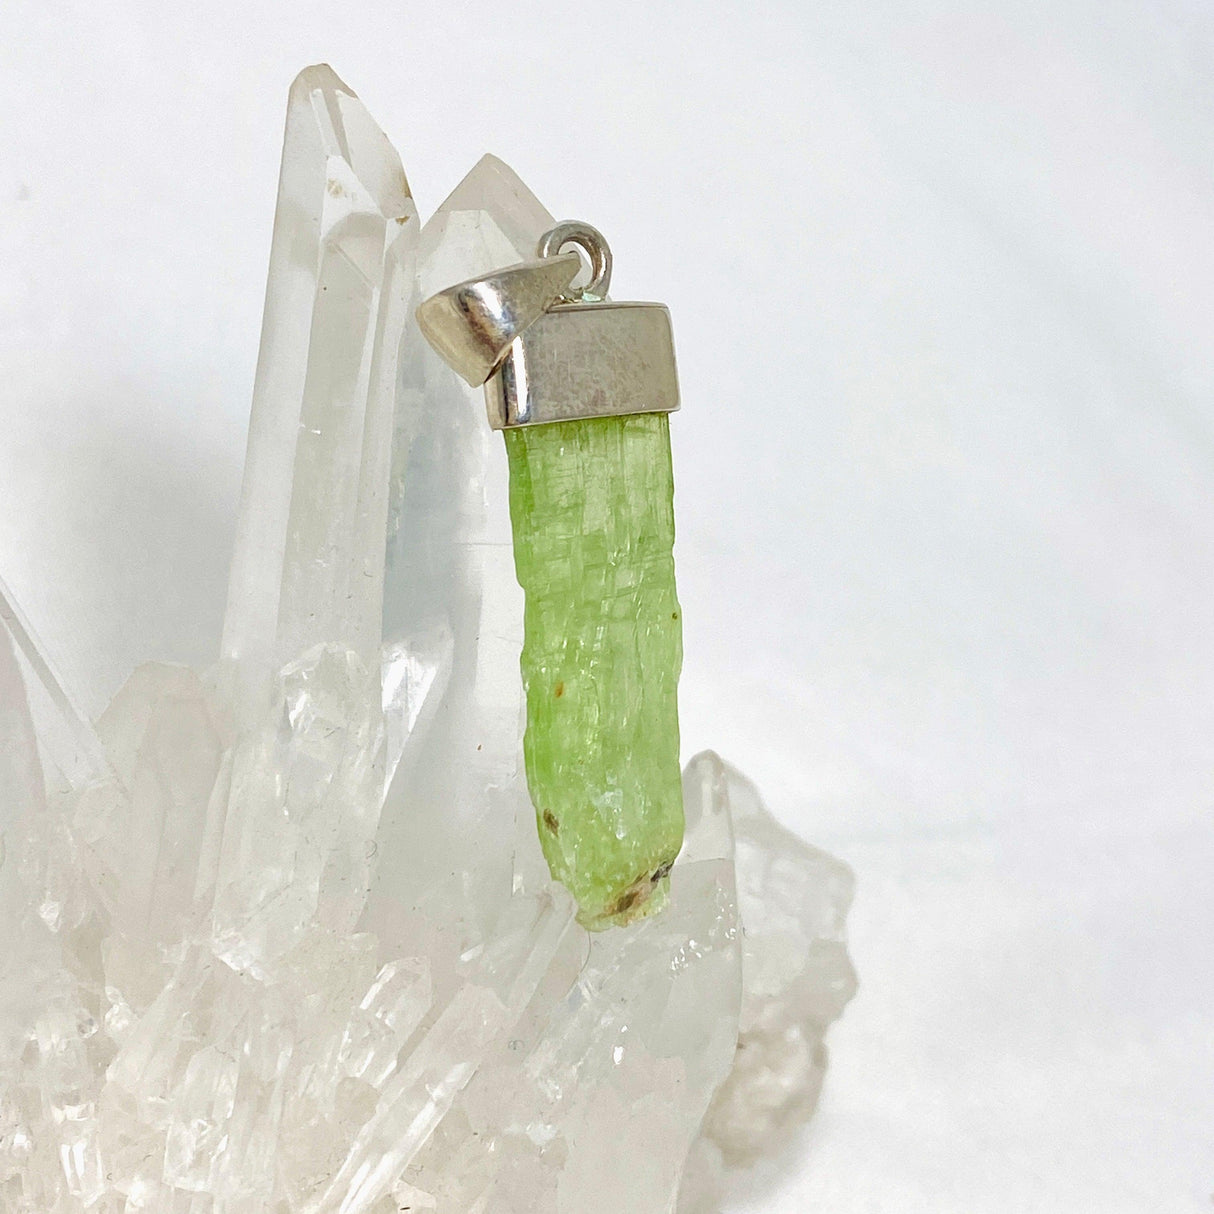 Green Kyanite Raw Crystal Pendant PPGJ757 - Nature's Magick